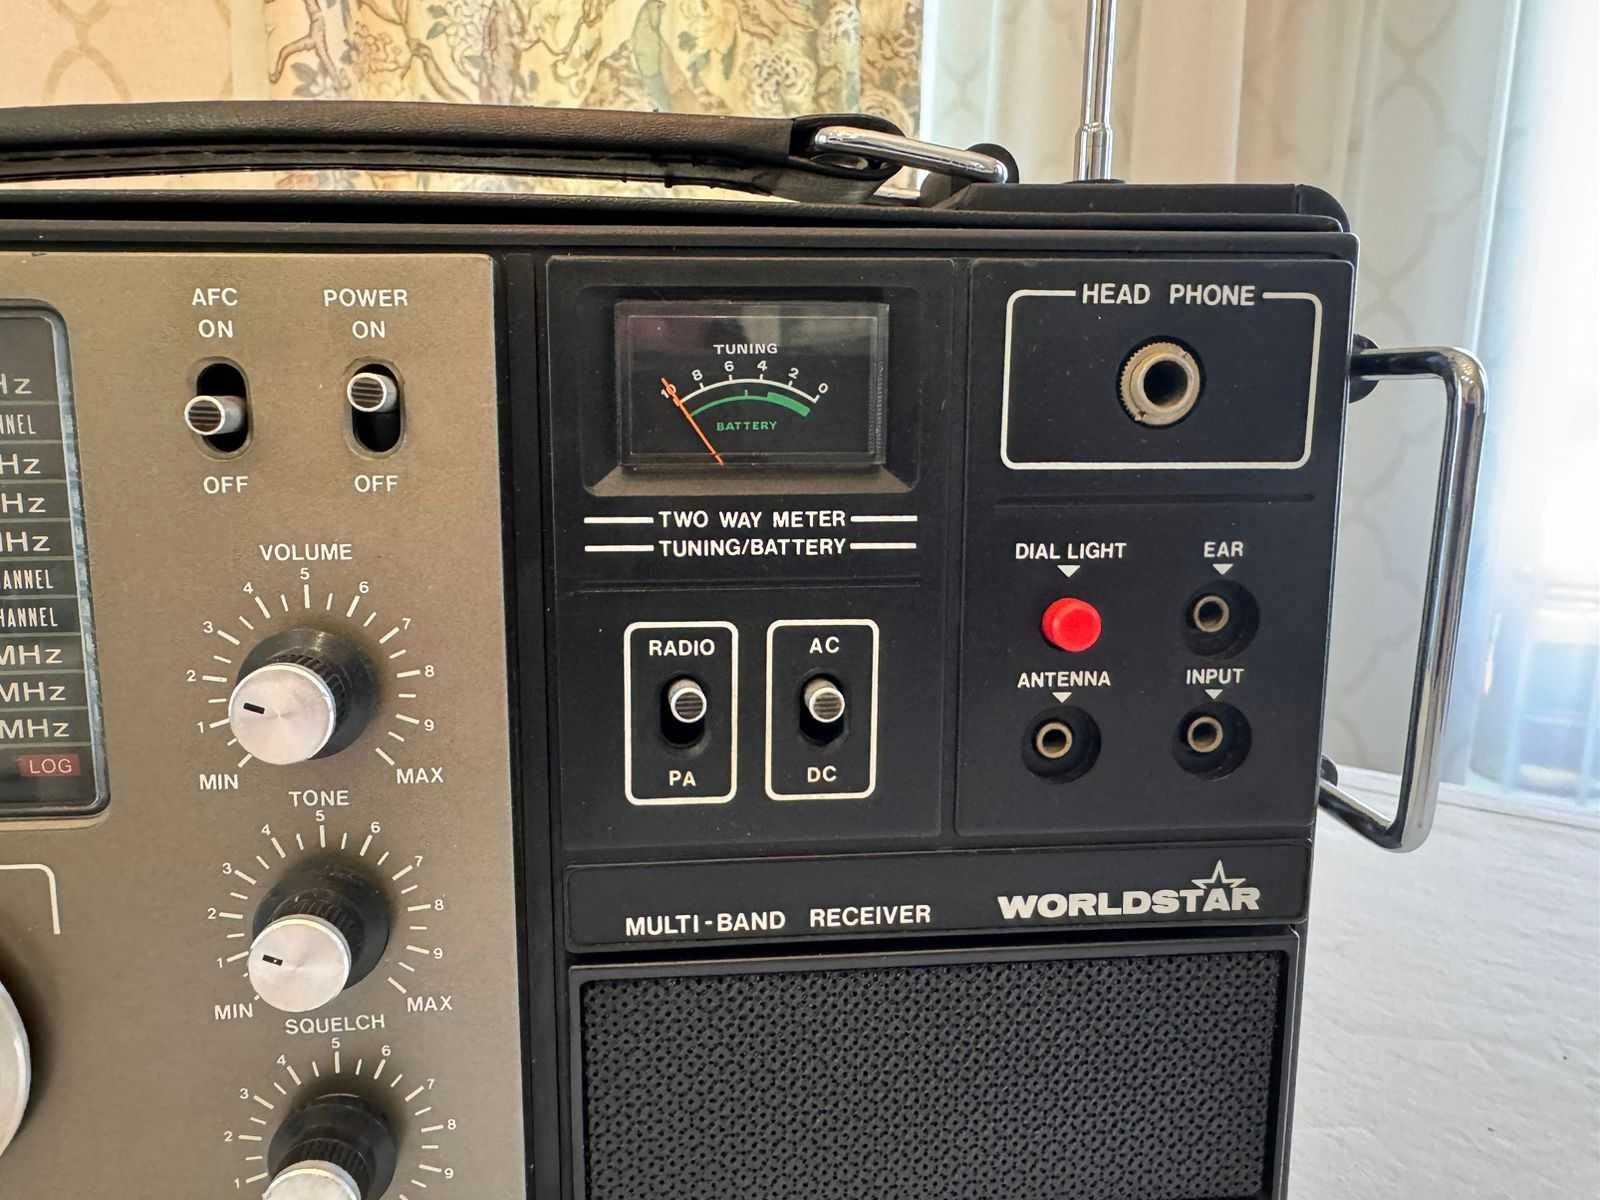 WORLDSTAR Model No. MG-6000 Multiband receiver